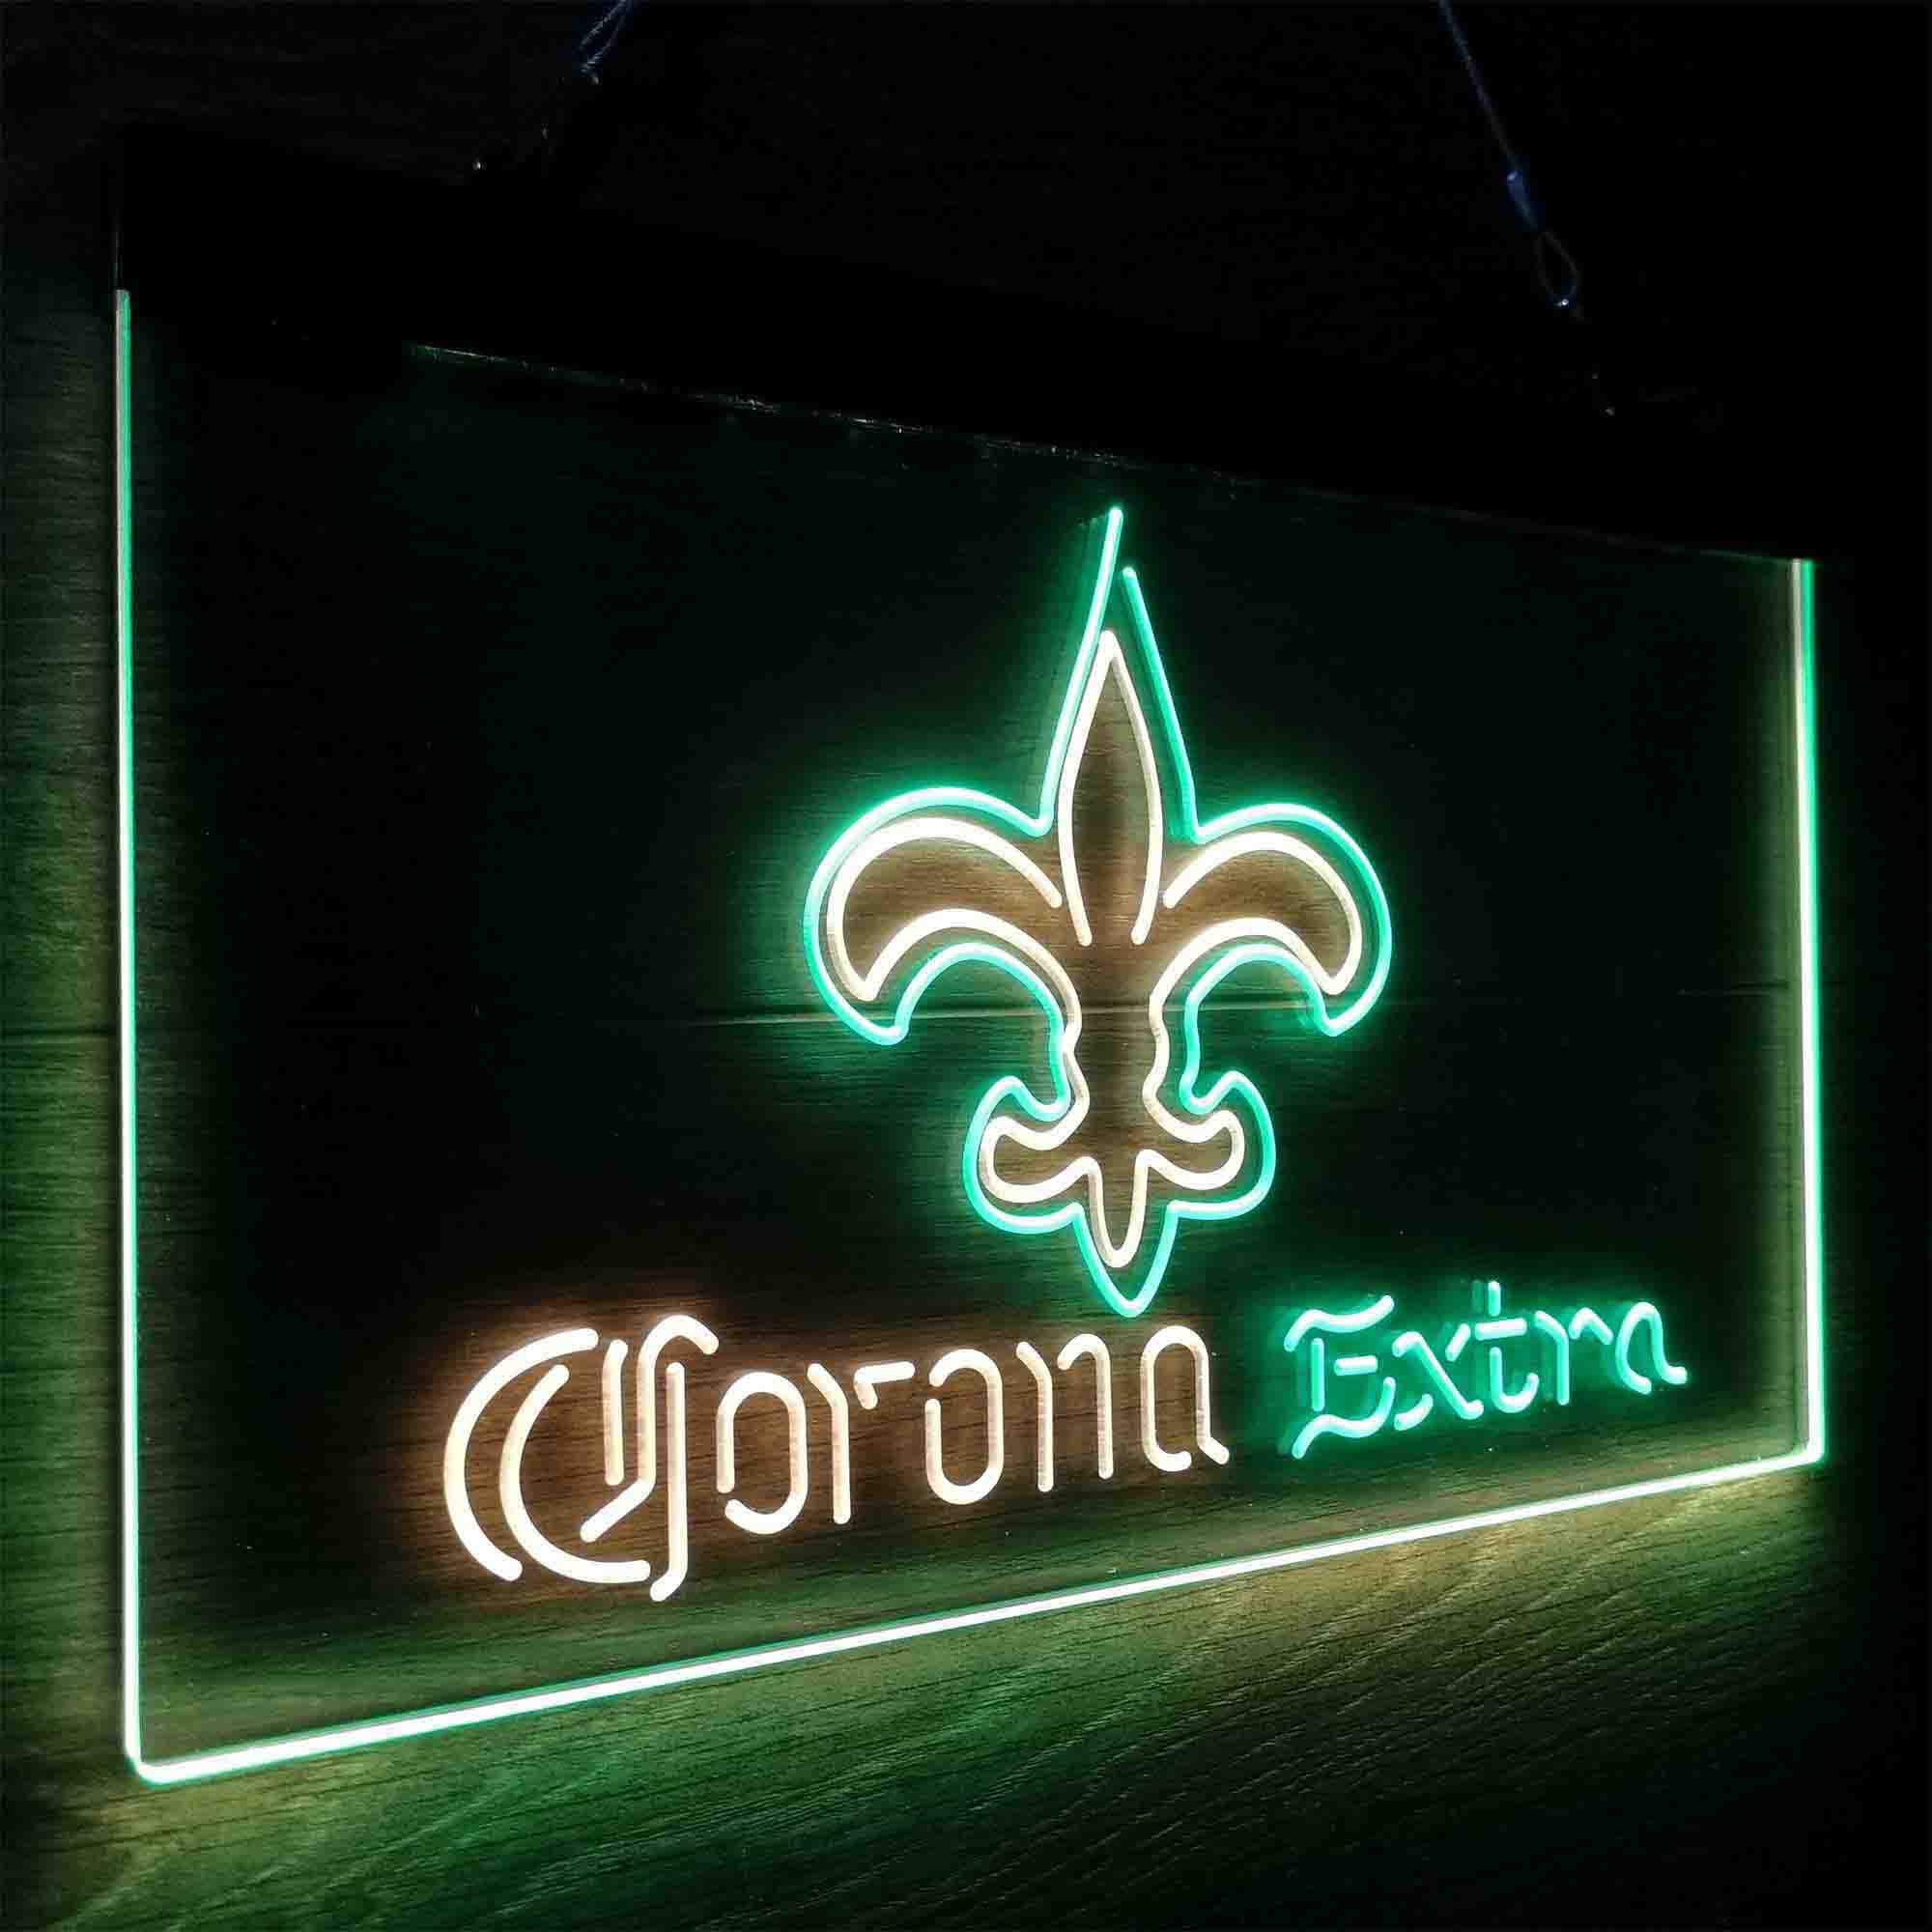 Corona Extra Bar New Orleans Saints Est. 1967 LED Neon Sign